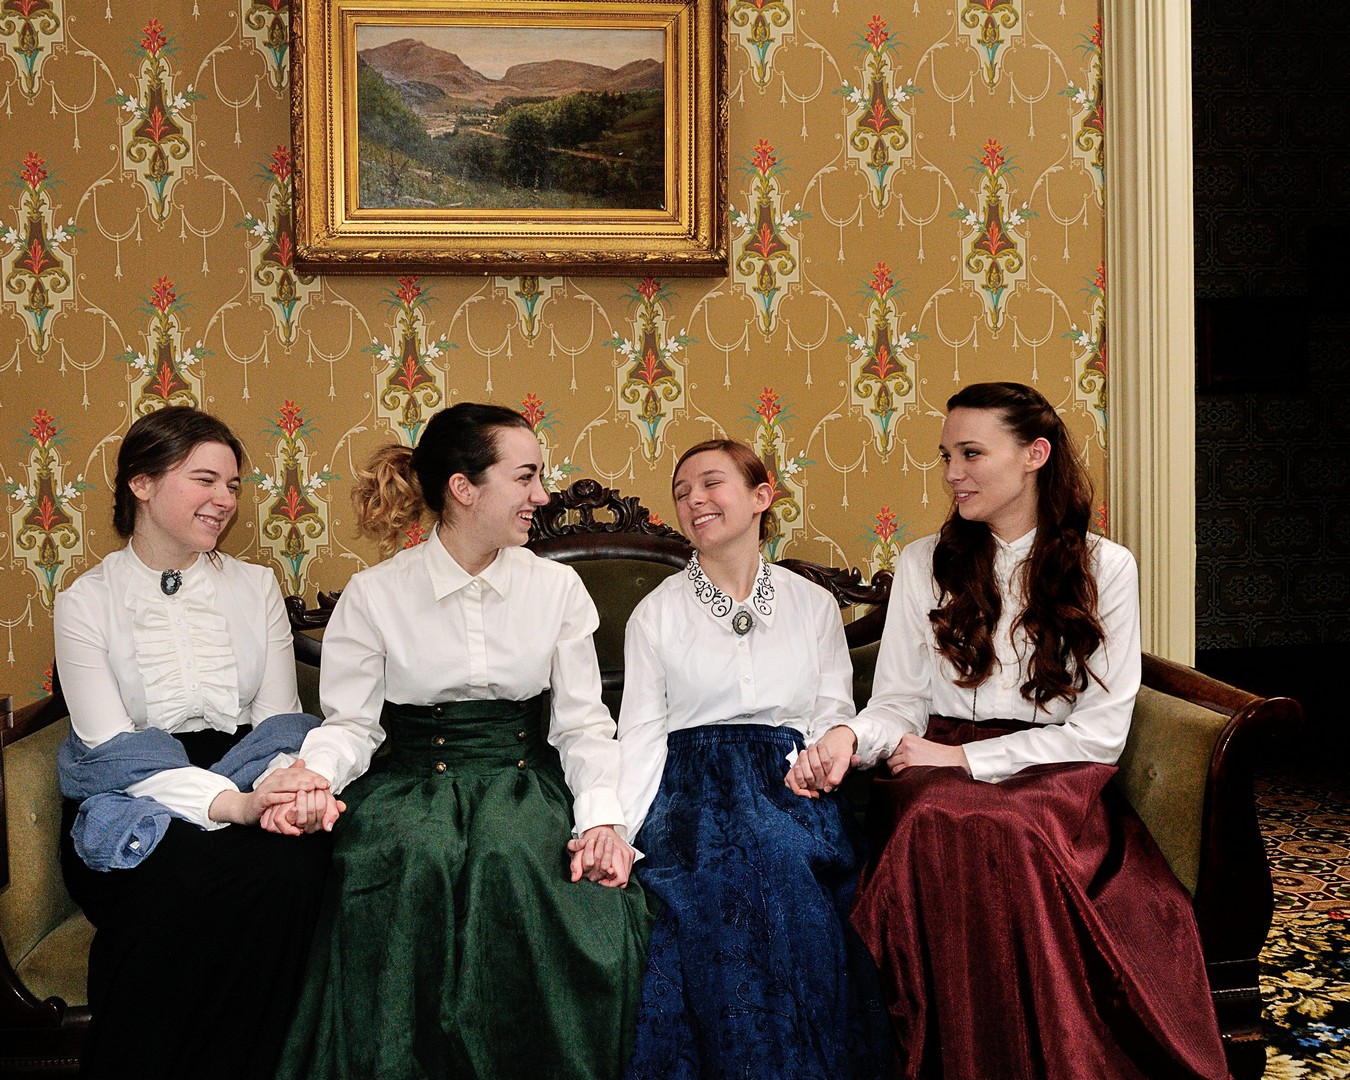 Megan Edelman, Christina Higgins, Molly Edelman, and Allison Kessler in Victorian Theatre’s LITTLE WOMEN at the Ebenezer Maxwell Mansion (Photo credit: Rowland Hetrick).